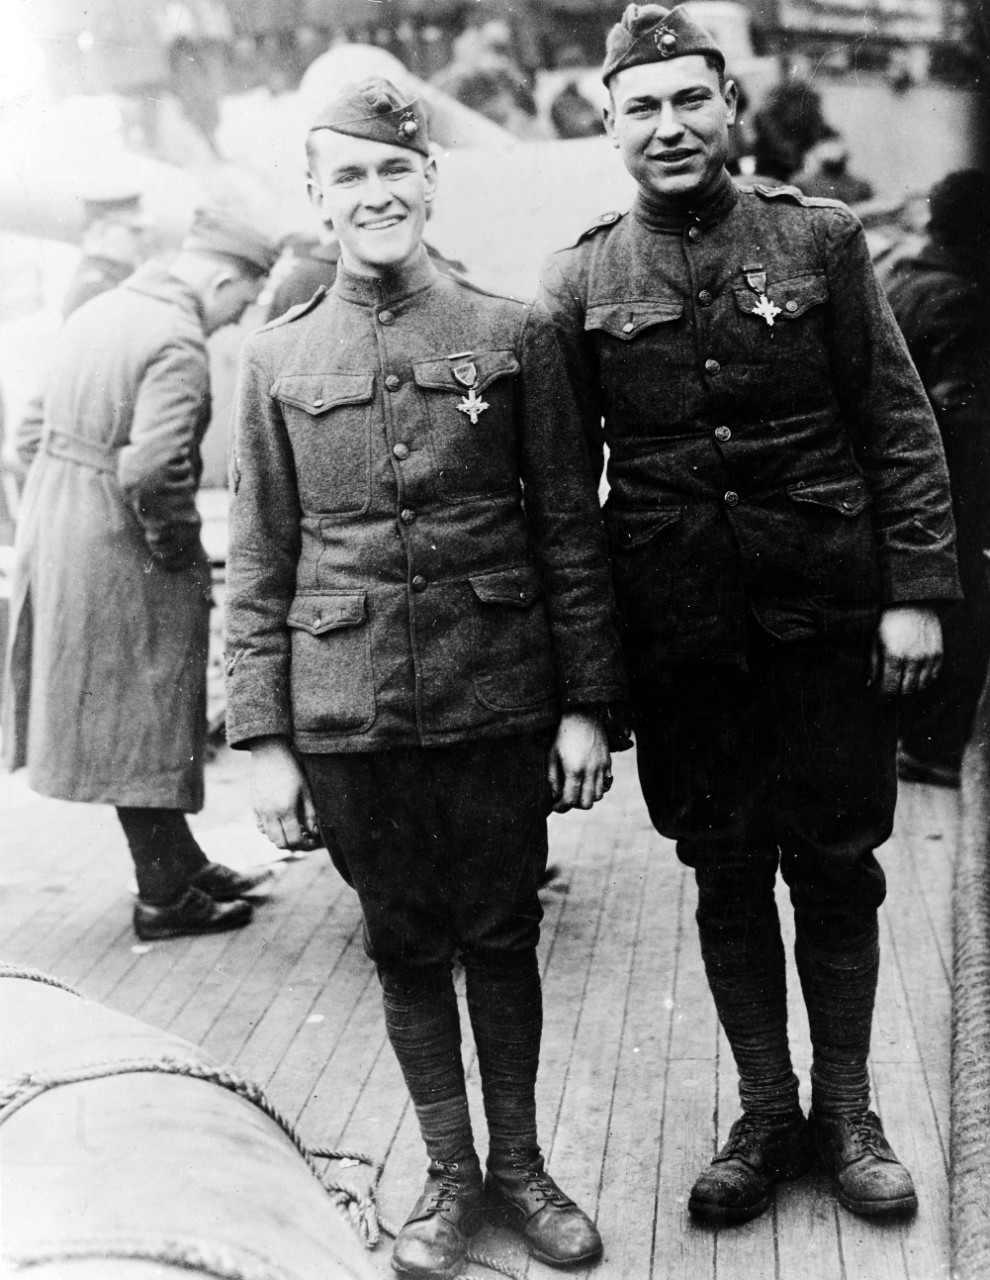 Corporal John J. Doody, USMC, and Private John Beck Flocken, USMC